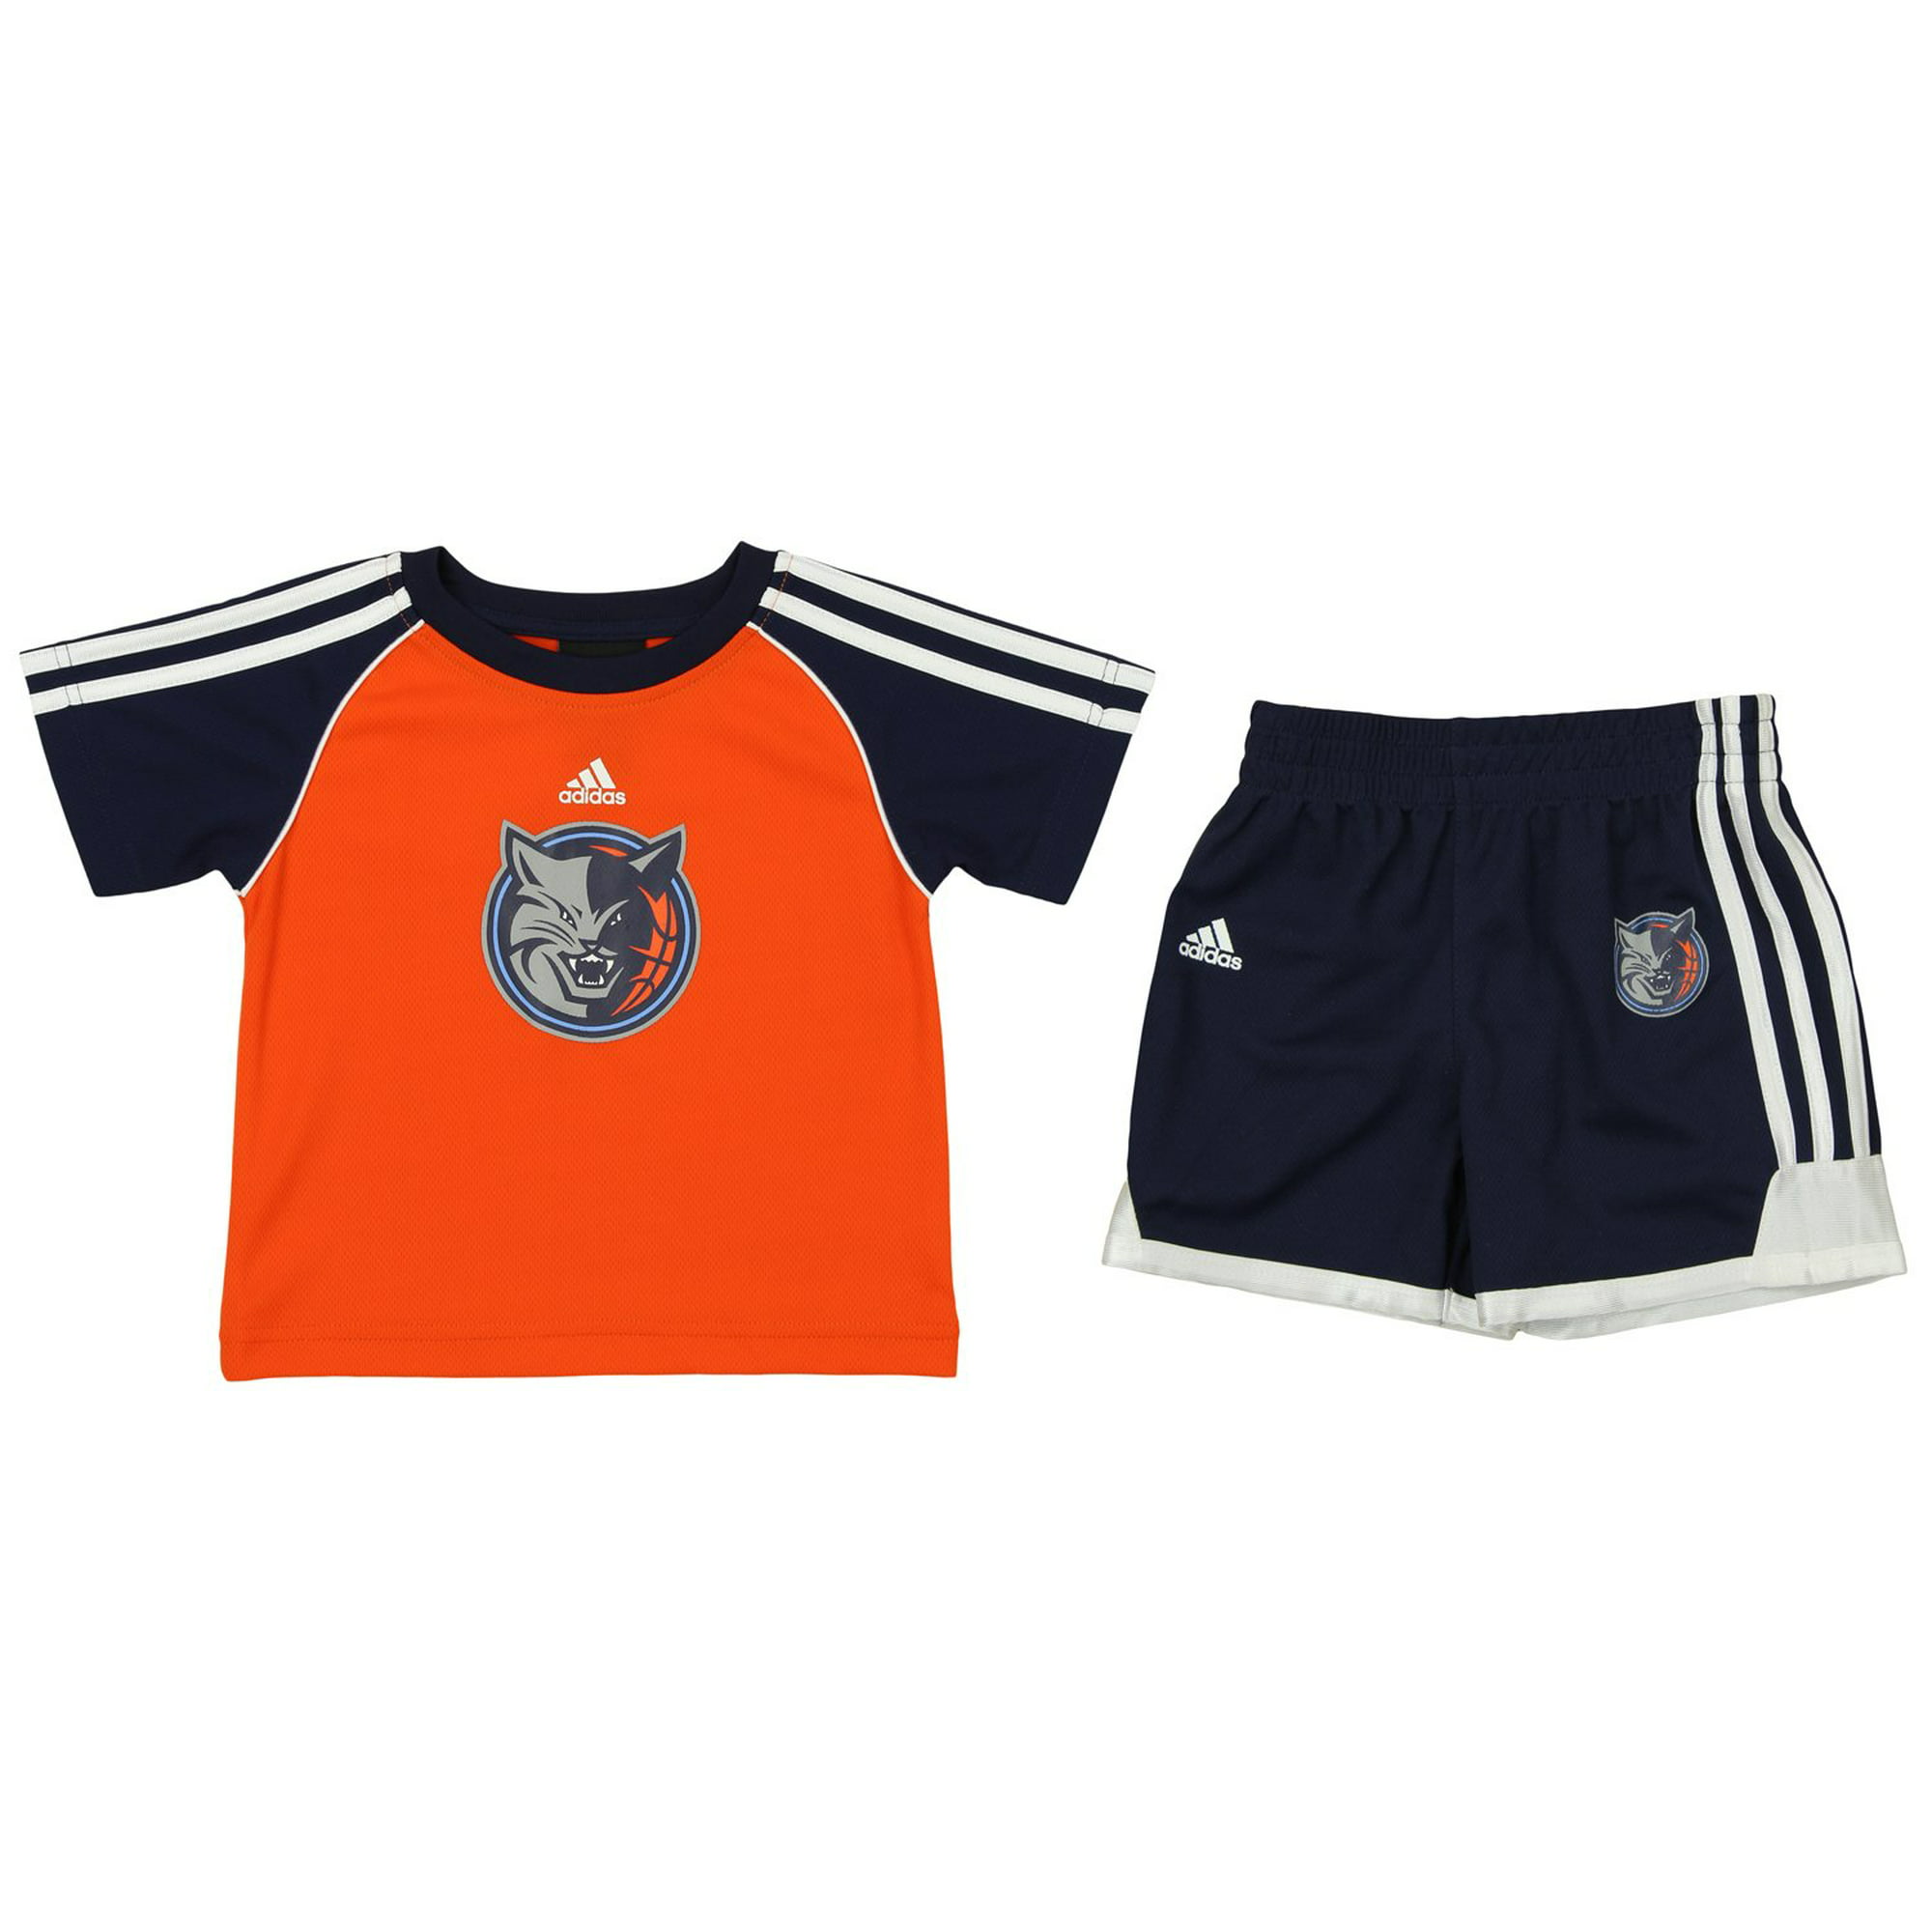 Adidas NBA Toddlers Charlotte Bobcats Short Sleeve Tee and Shorts Set, Orange - 2T